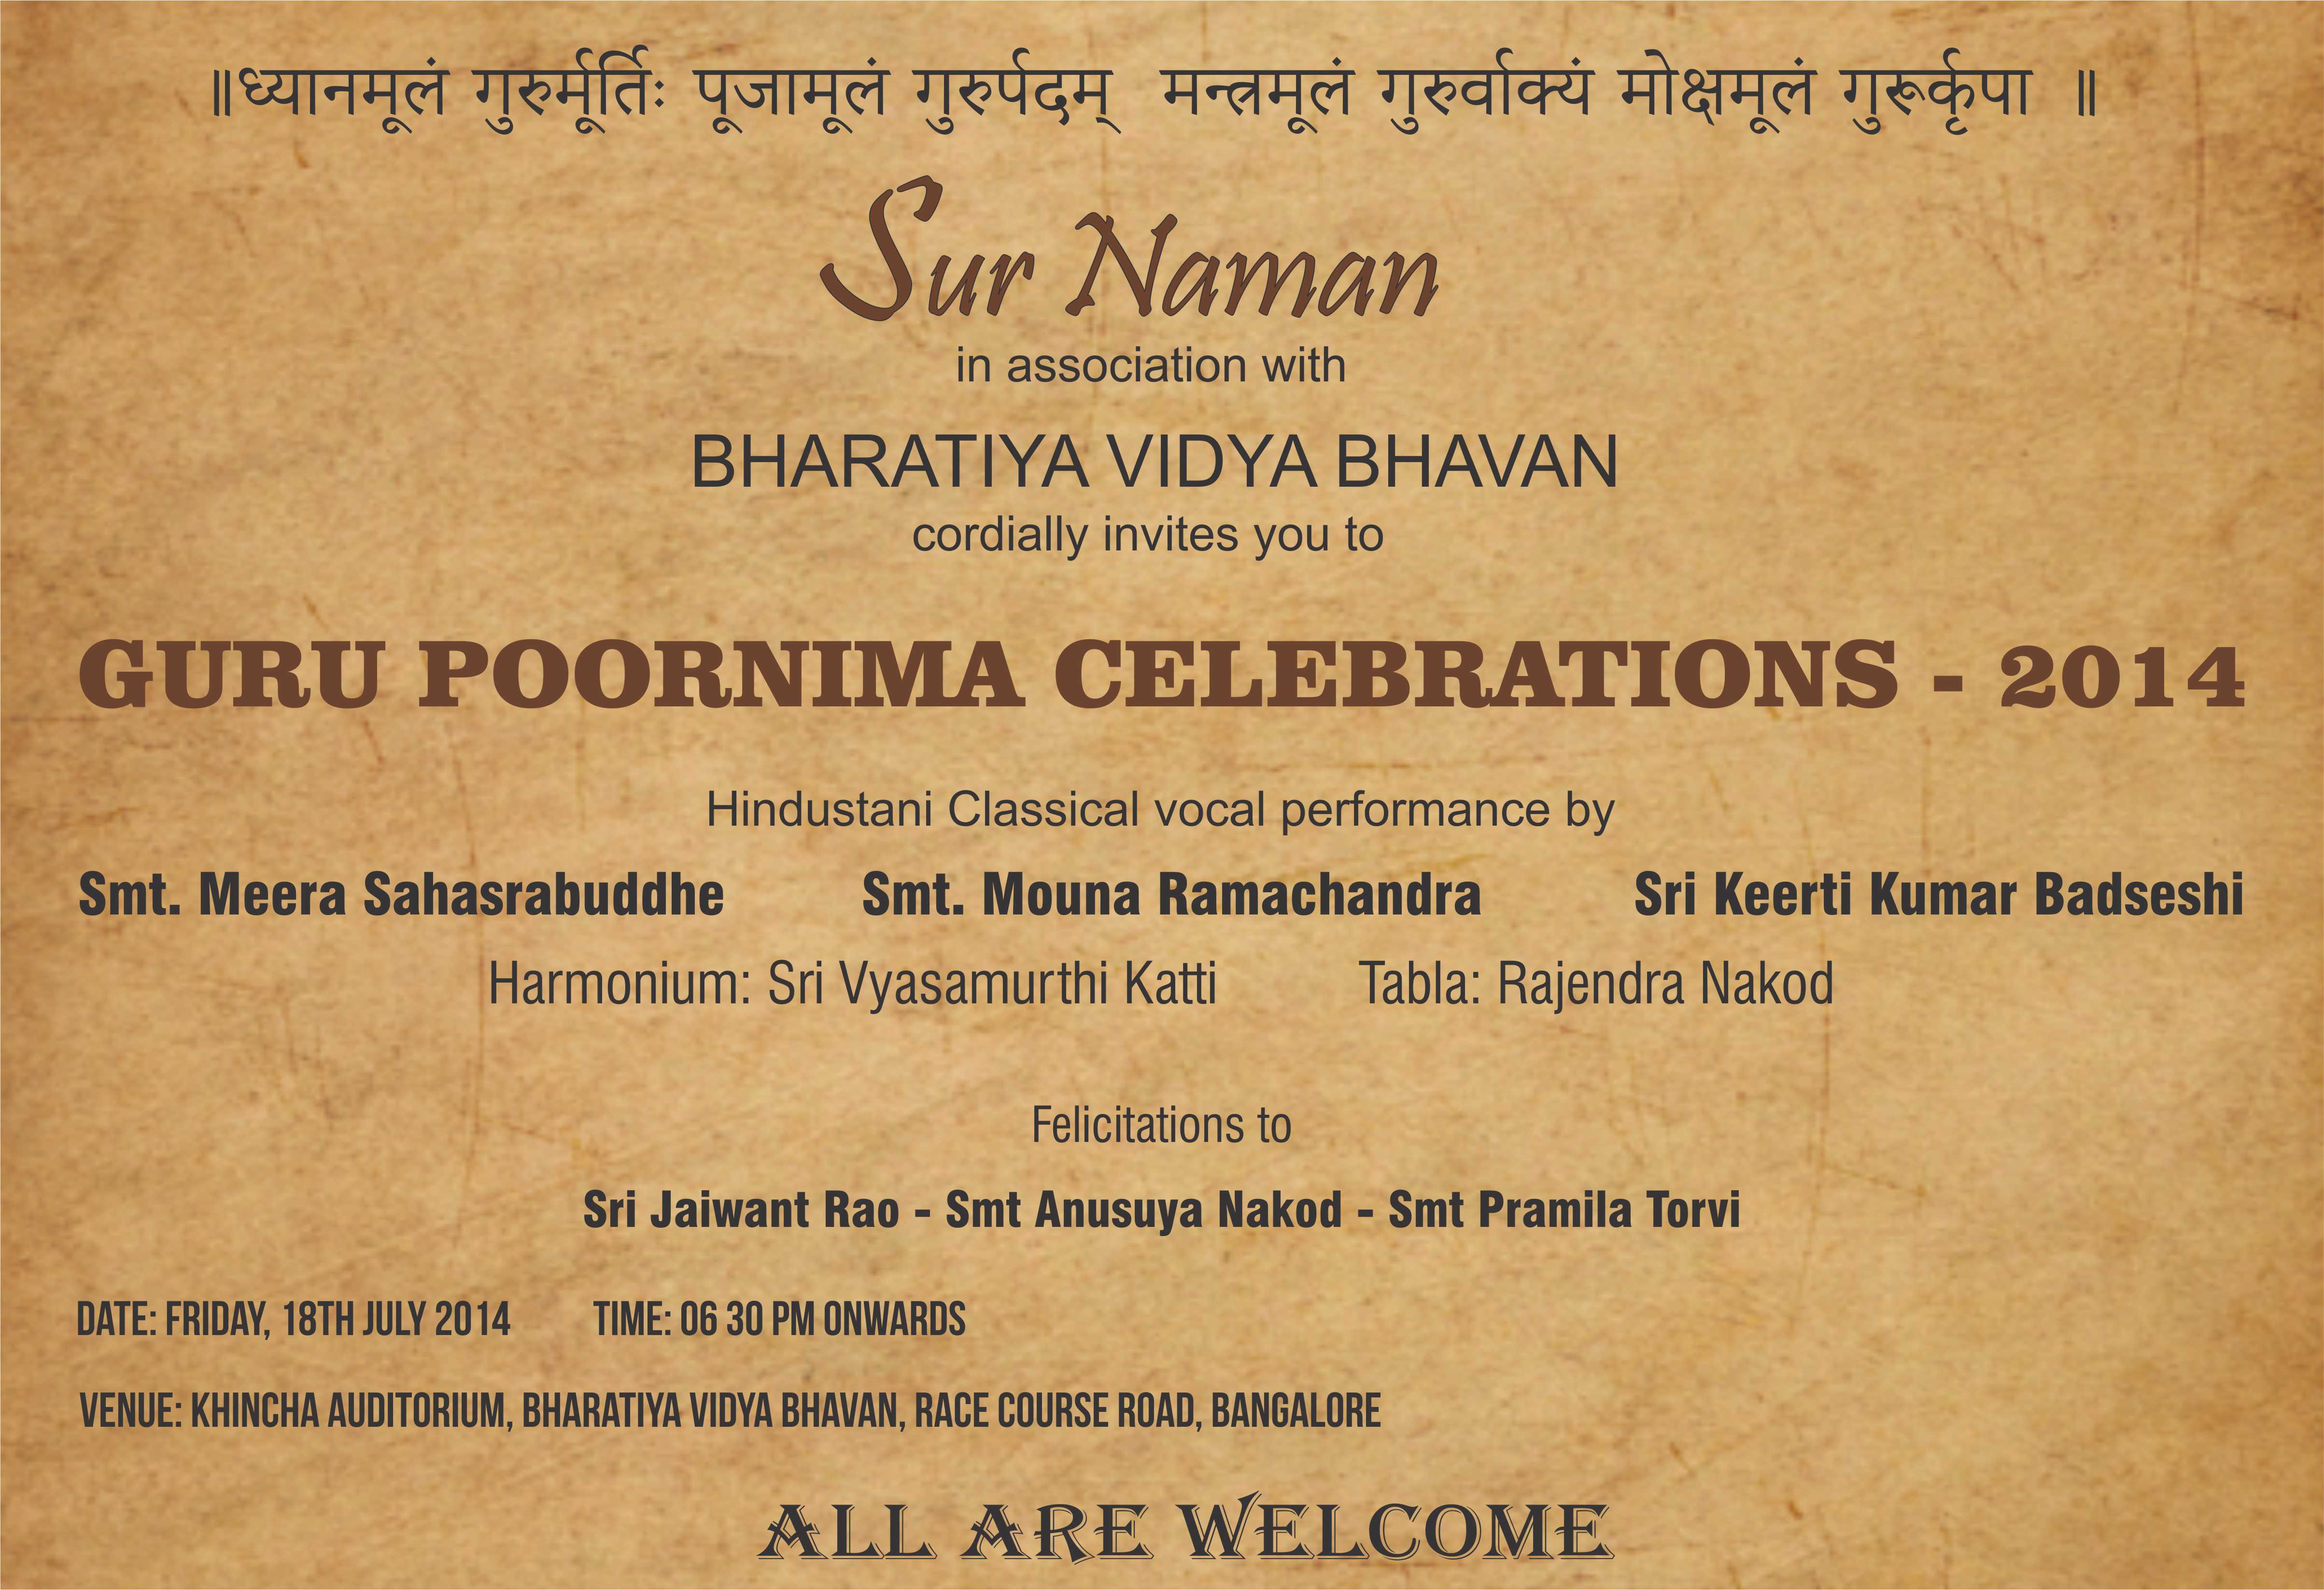 https://whatshappbangalore.files.wordpress.com/2014/07/guru-poornima-2014-an-evening-of-hindustani-classical-vocal-performances.jpg